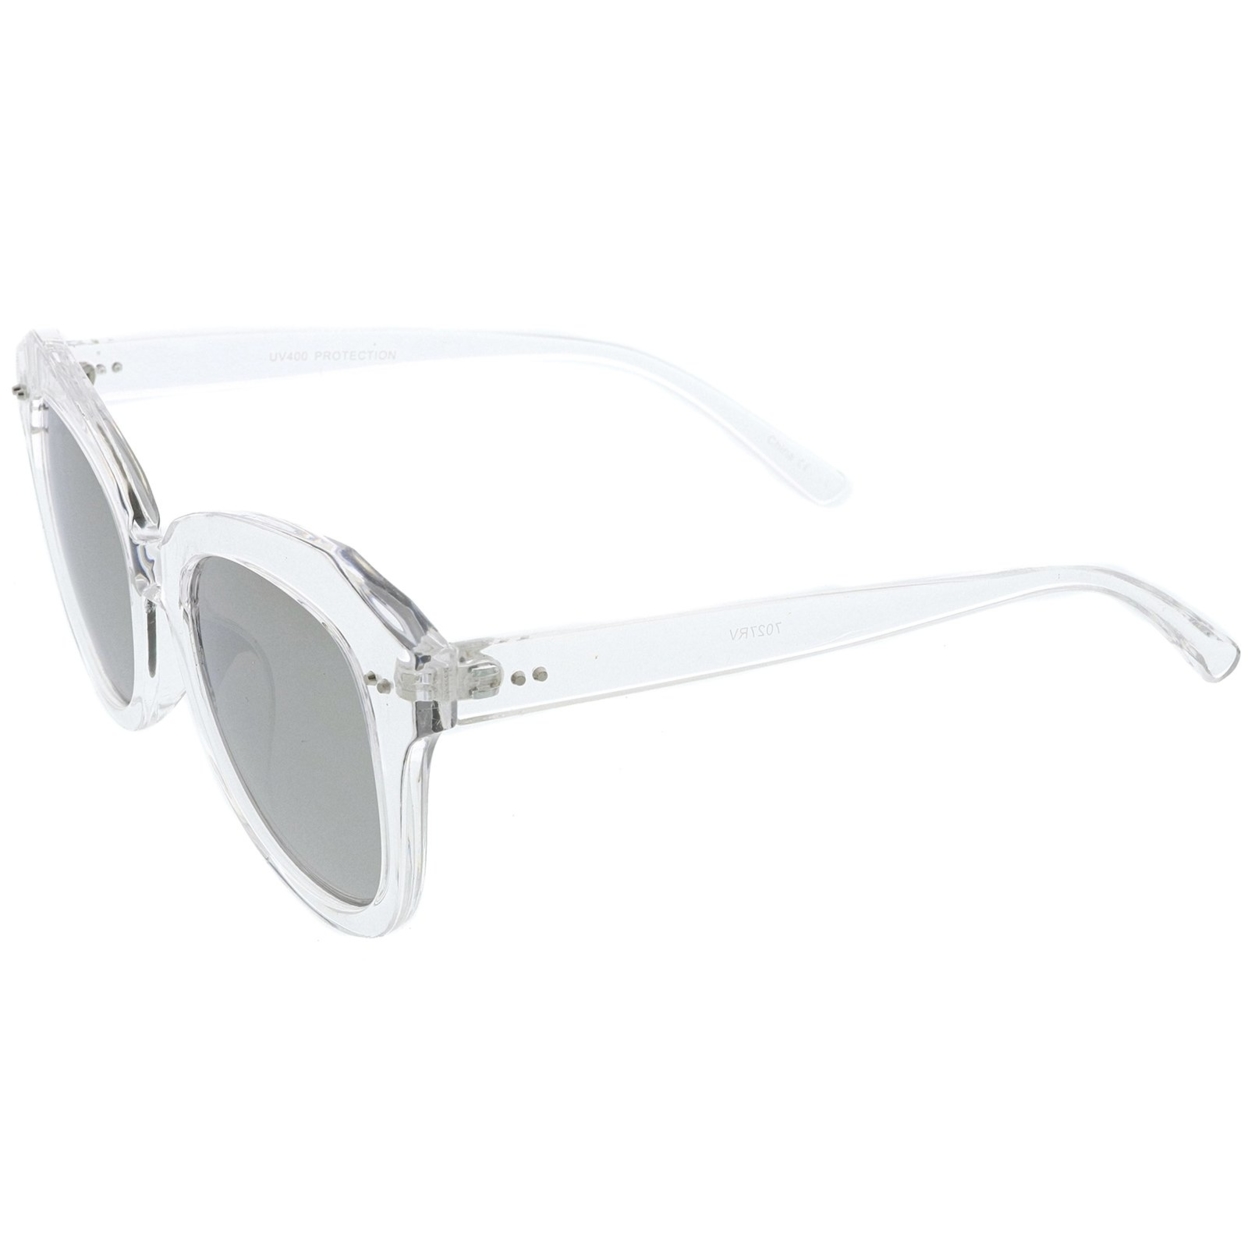 Women's Oversize Horn Rimmed Colored Mirror Round Lens Cat Eye Sunglasses 52mm - Tortoise / Blue Mirror